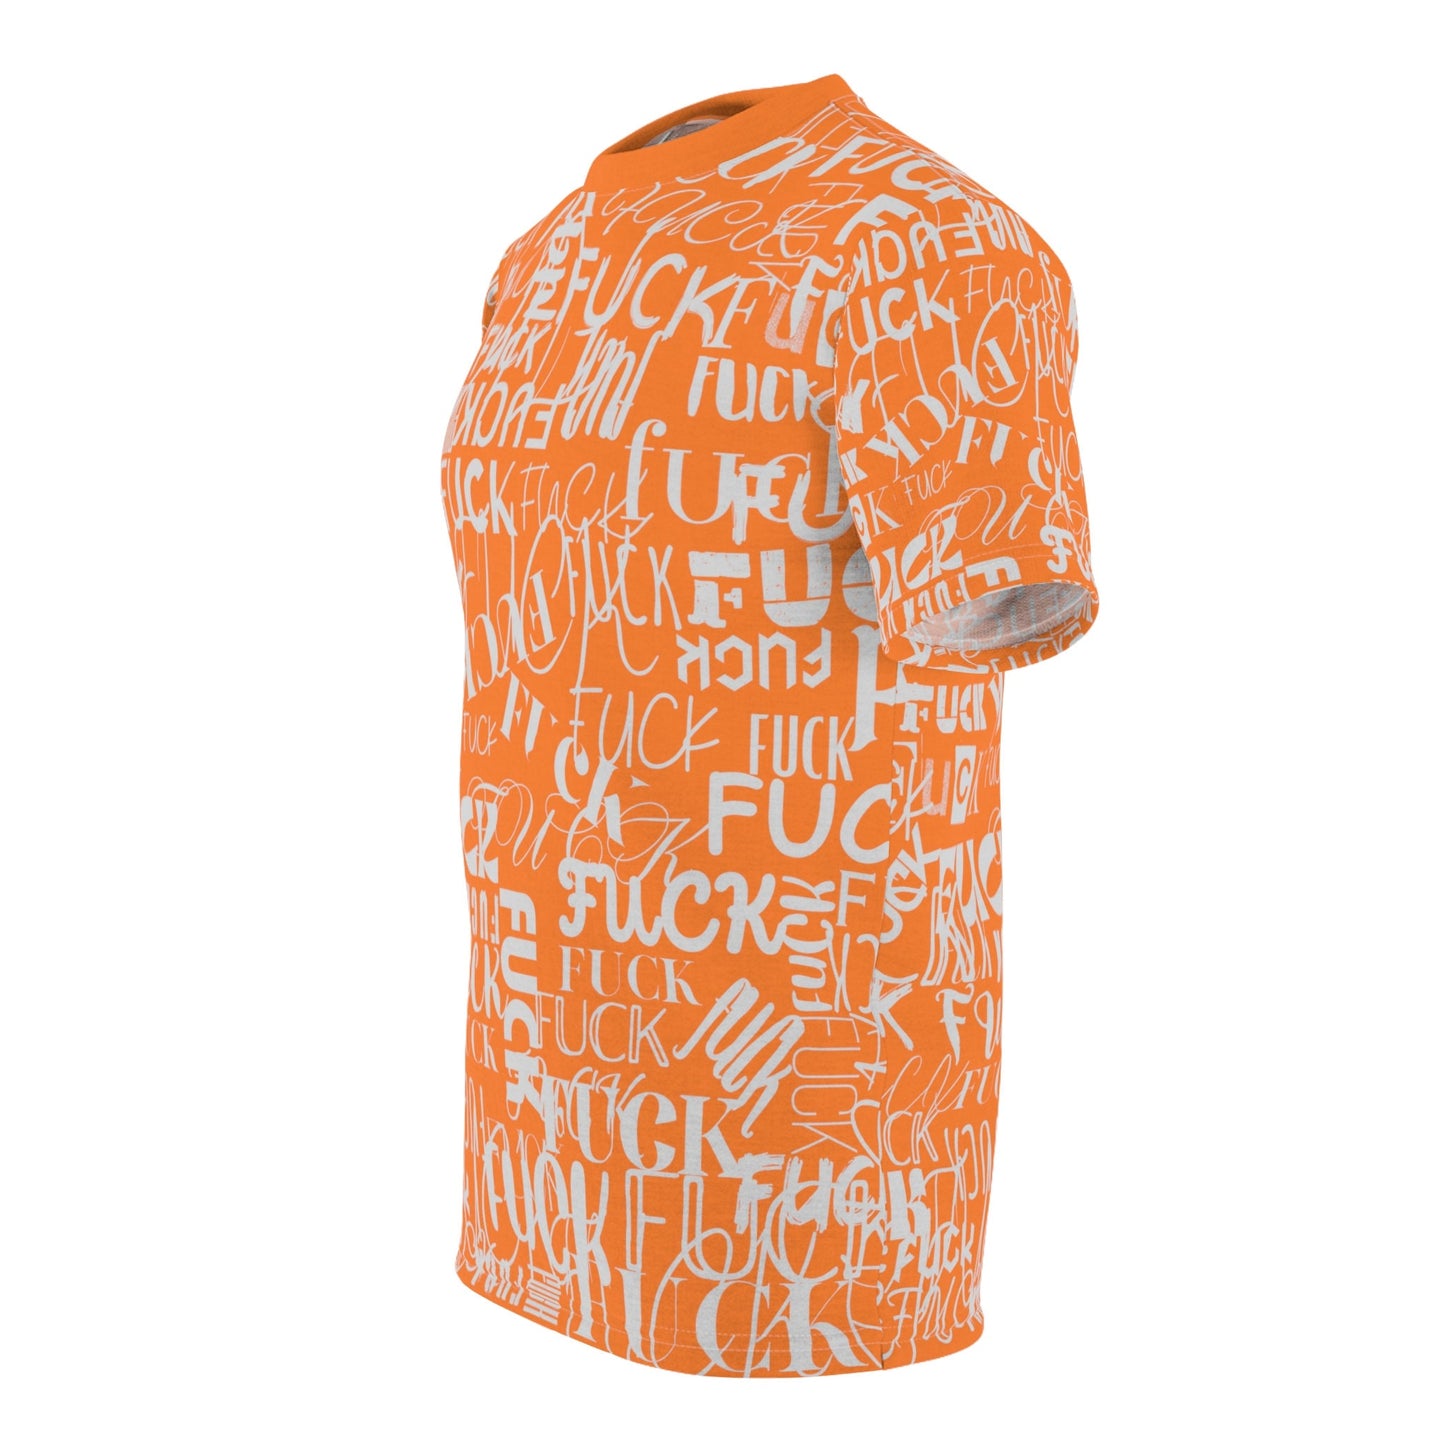 FCK -Trendy Fuck Shirt, Rude Word Tee, Cool Student Tshirt, Gamers T-shirt gift, Streetwear Fashion, Funky Orange Grey, boyfriend unisex fit